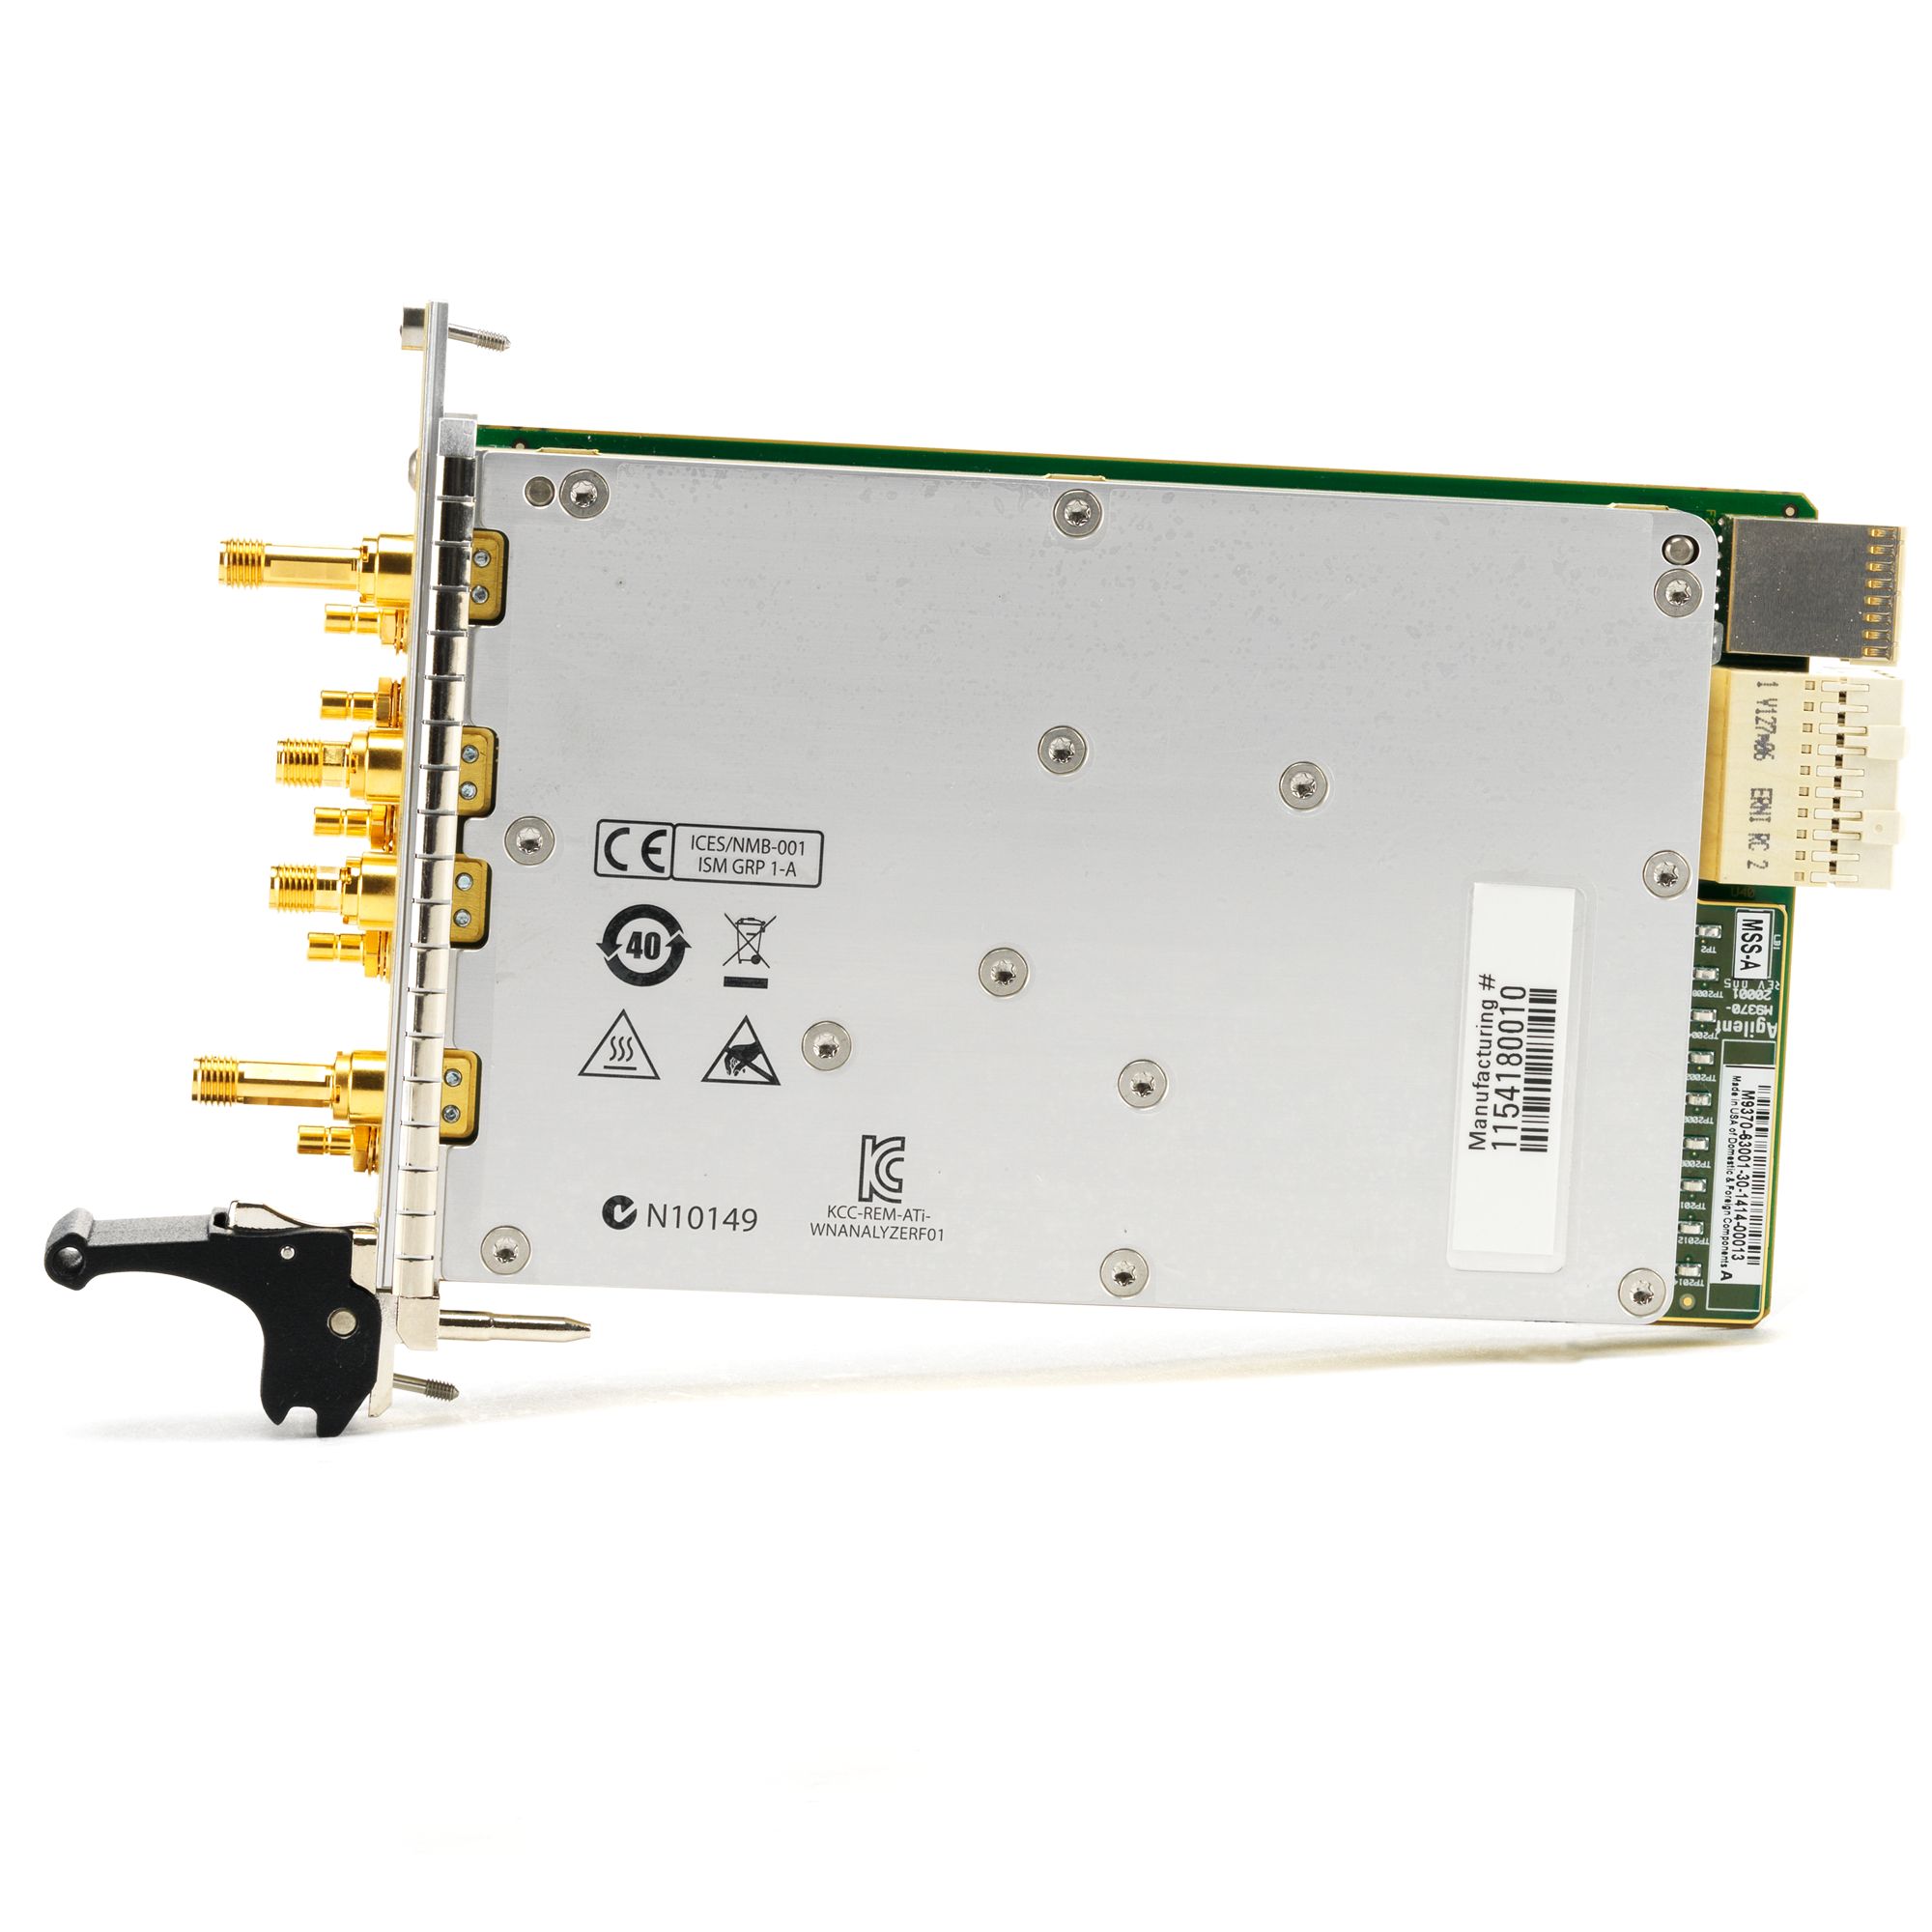 Keysight M9372A PXIe Vector Network Analyzer / 300 kHz to 9 GHz